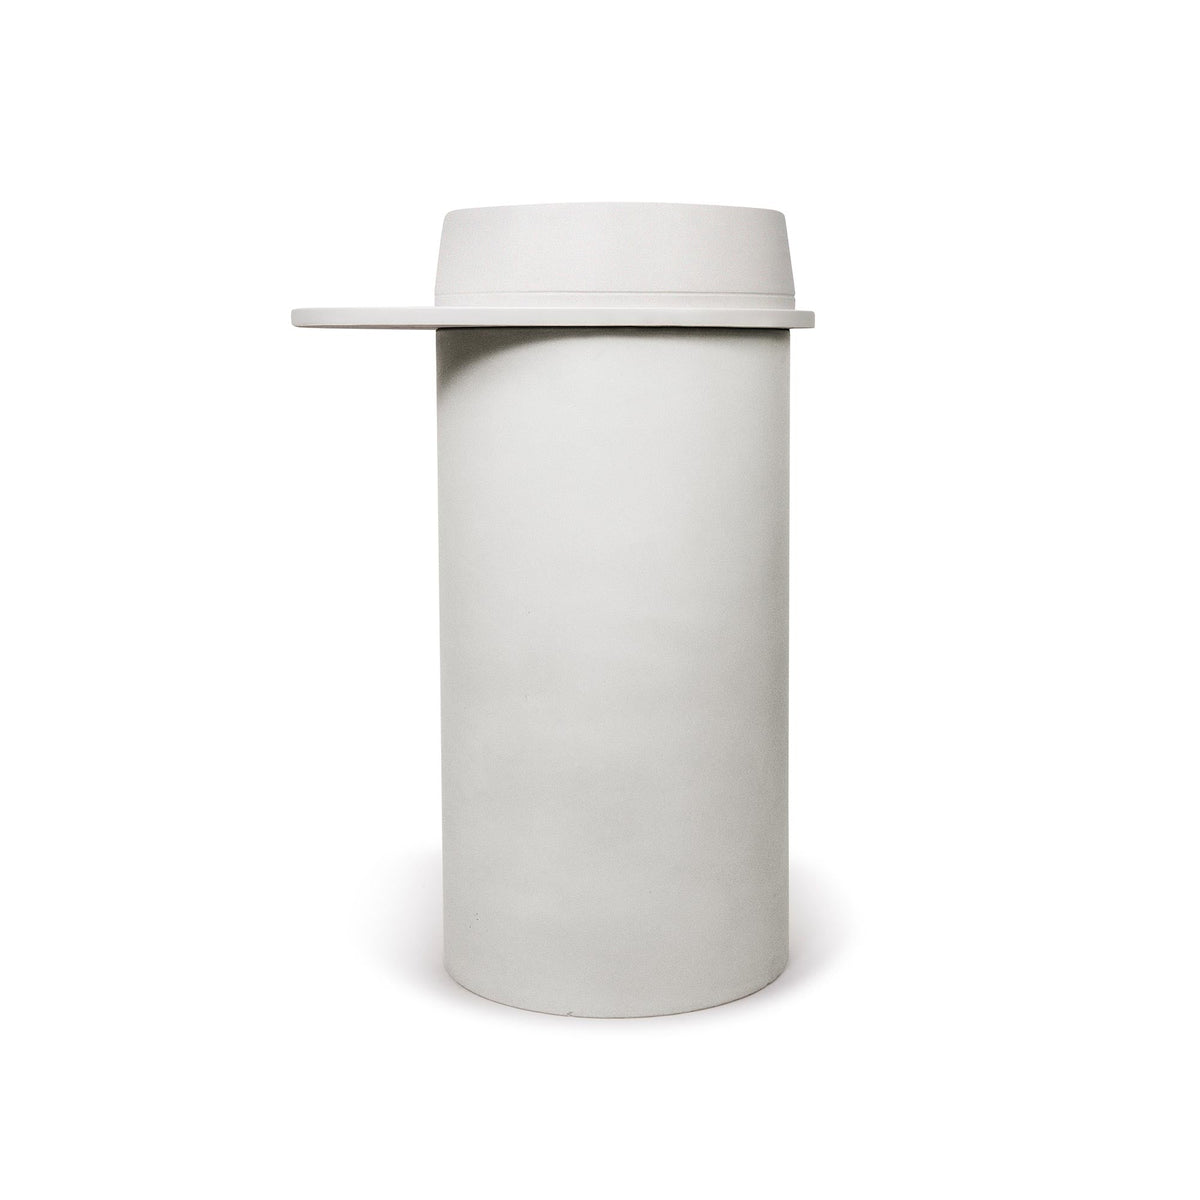 Cylinder with Tray - Funl Basin (Mint,Mid Tone Grey)